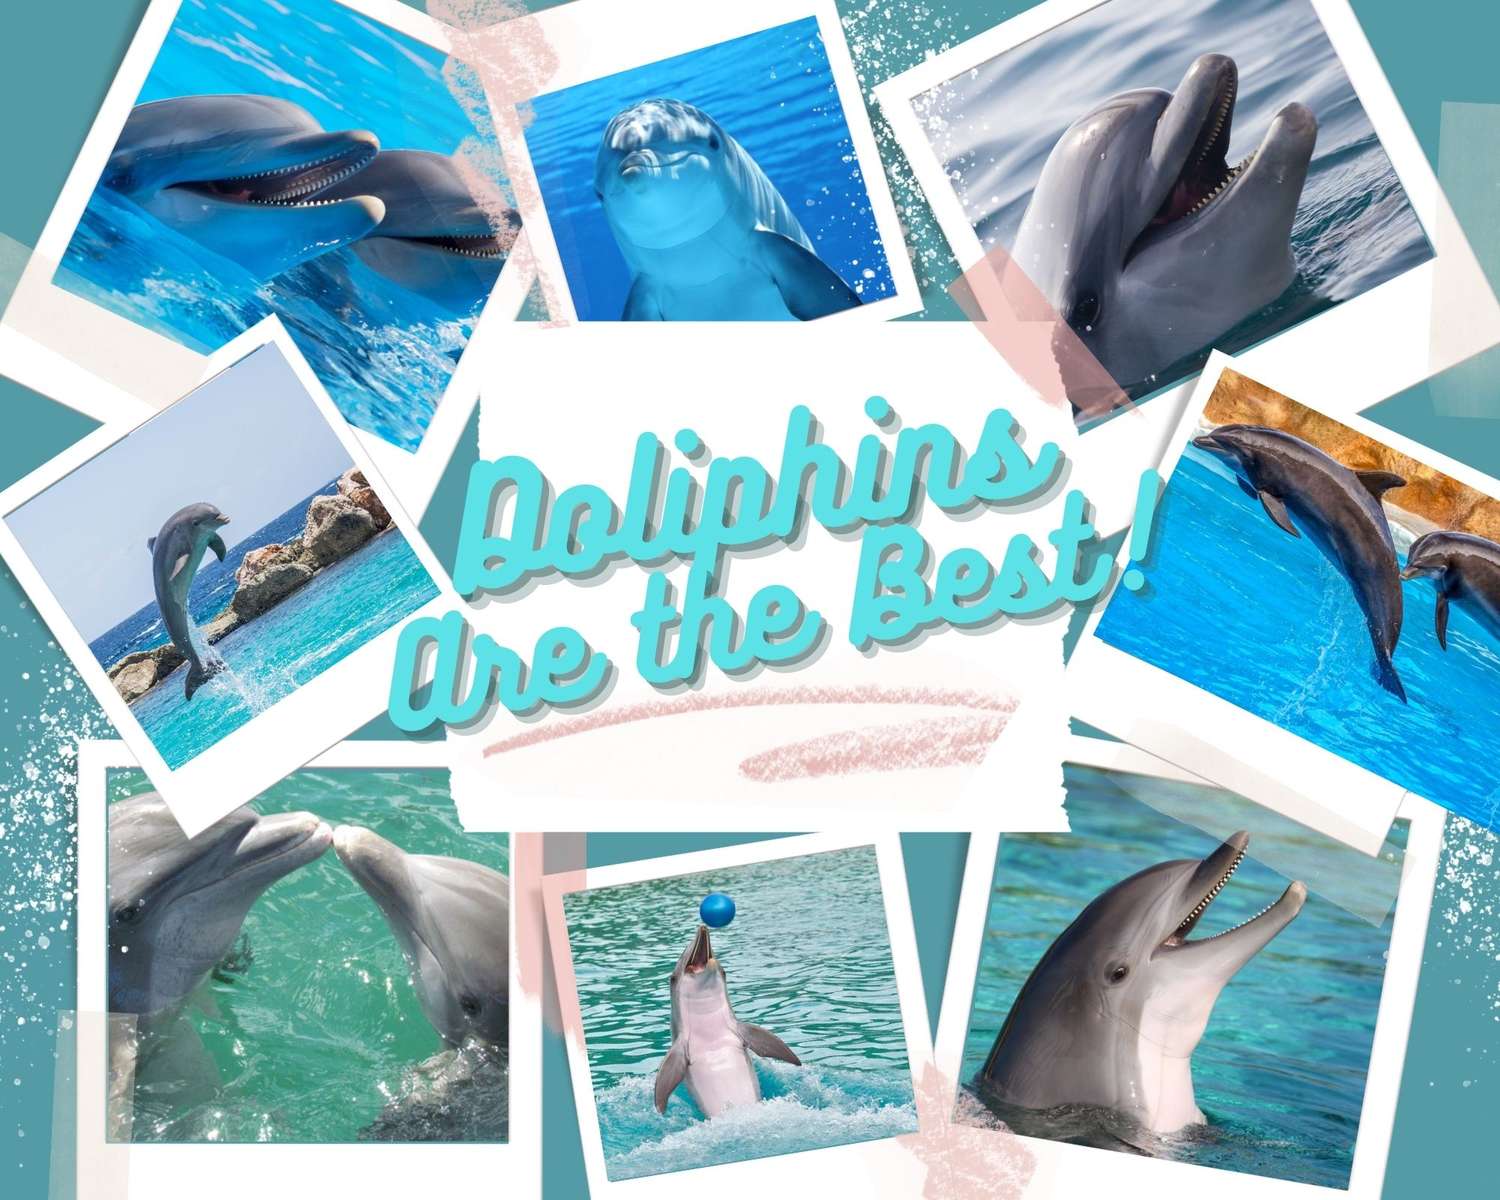 Delfiny puzzle online ze zdjęcia